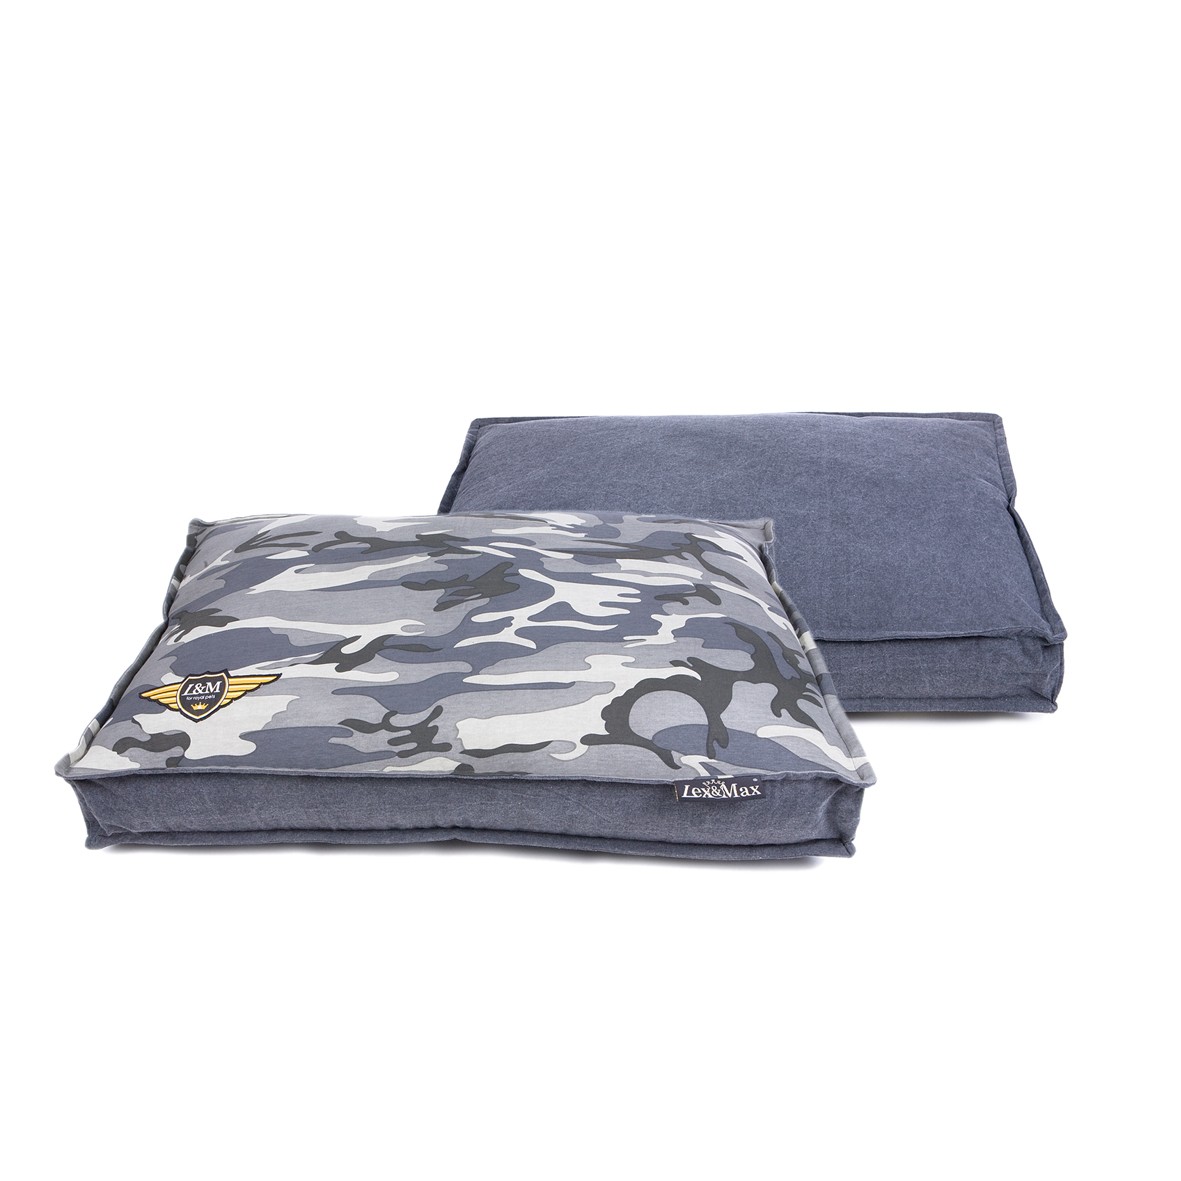 Lex & Max Luxusní pelíšek pro psa Lex & Max Army 75 x 50 cm | šedý